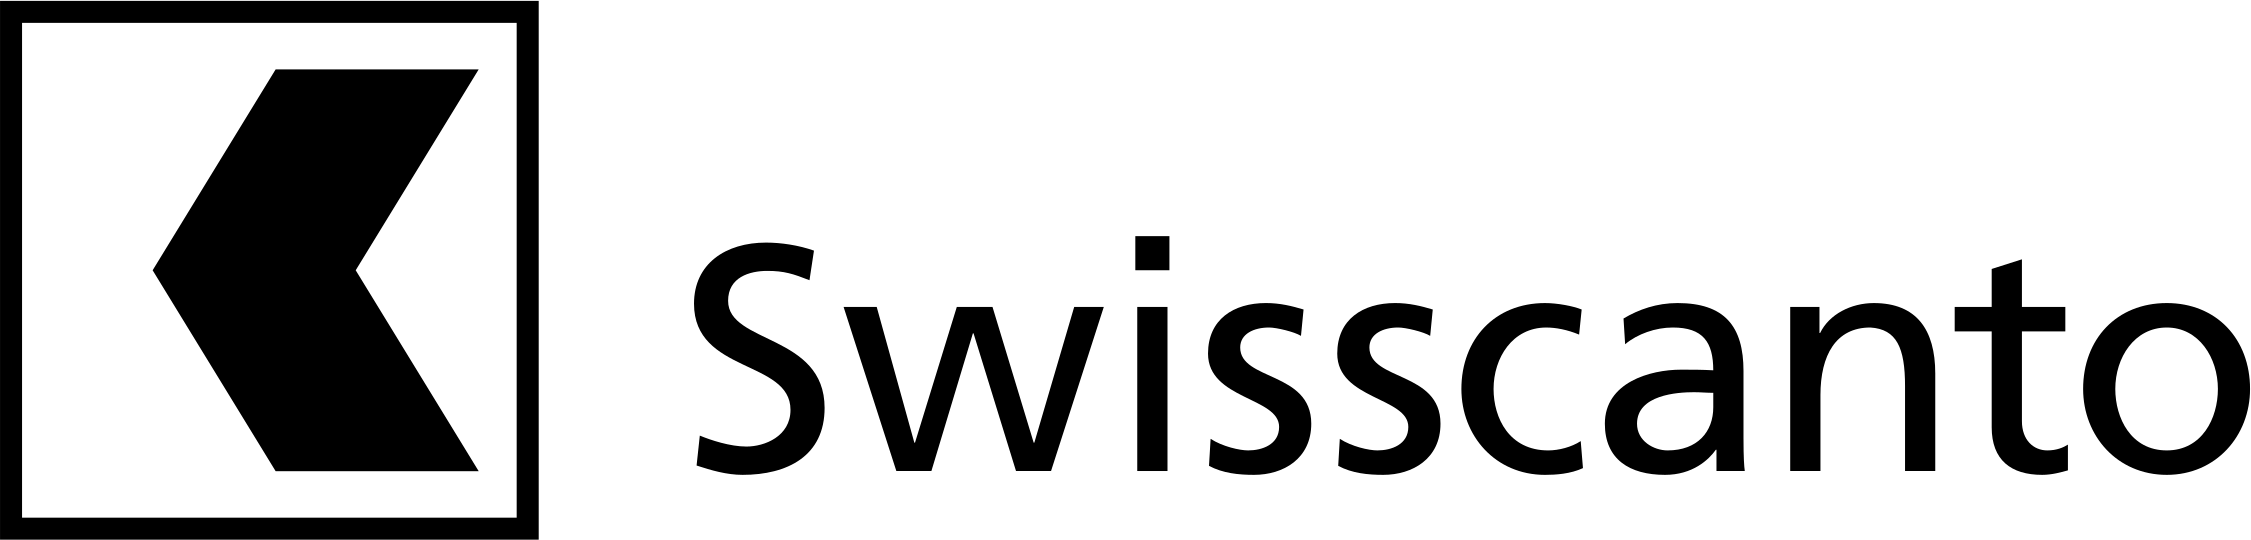 Swisscanto-logo-svg